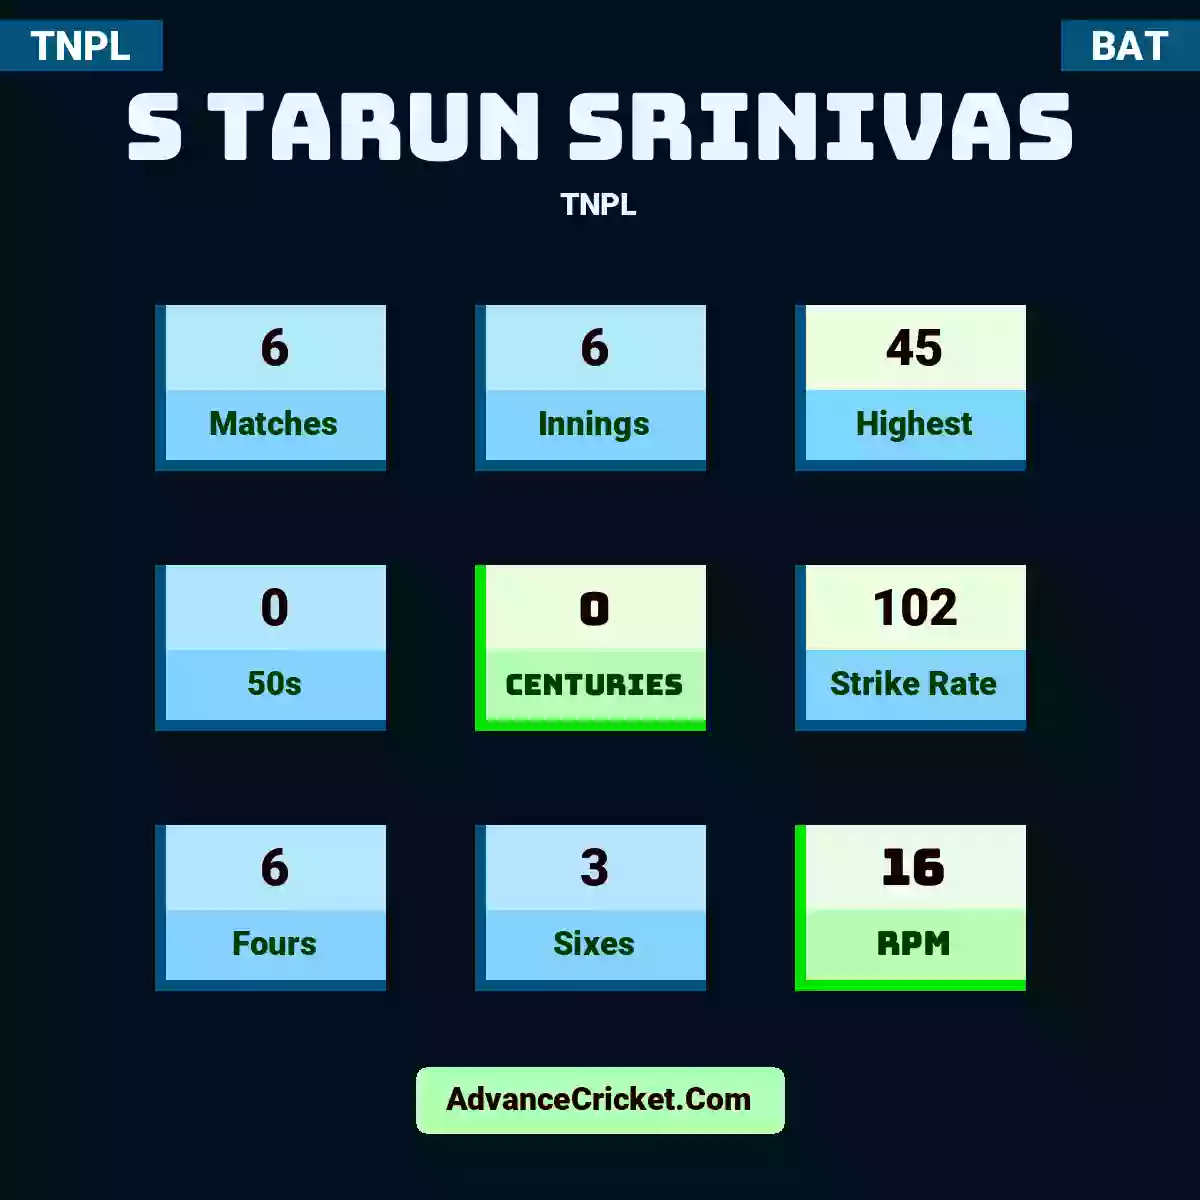 S Tarun Srinivas TNPL , S Tarun Srinivas played 6 matches, scored 45 runs as highest, 0 half-centuries, and 0 centuries, with a strike rate of 102. S.Srinivas hit 6 fours and 3 sixes, with an RPM of 16.